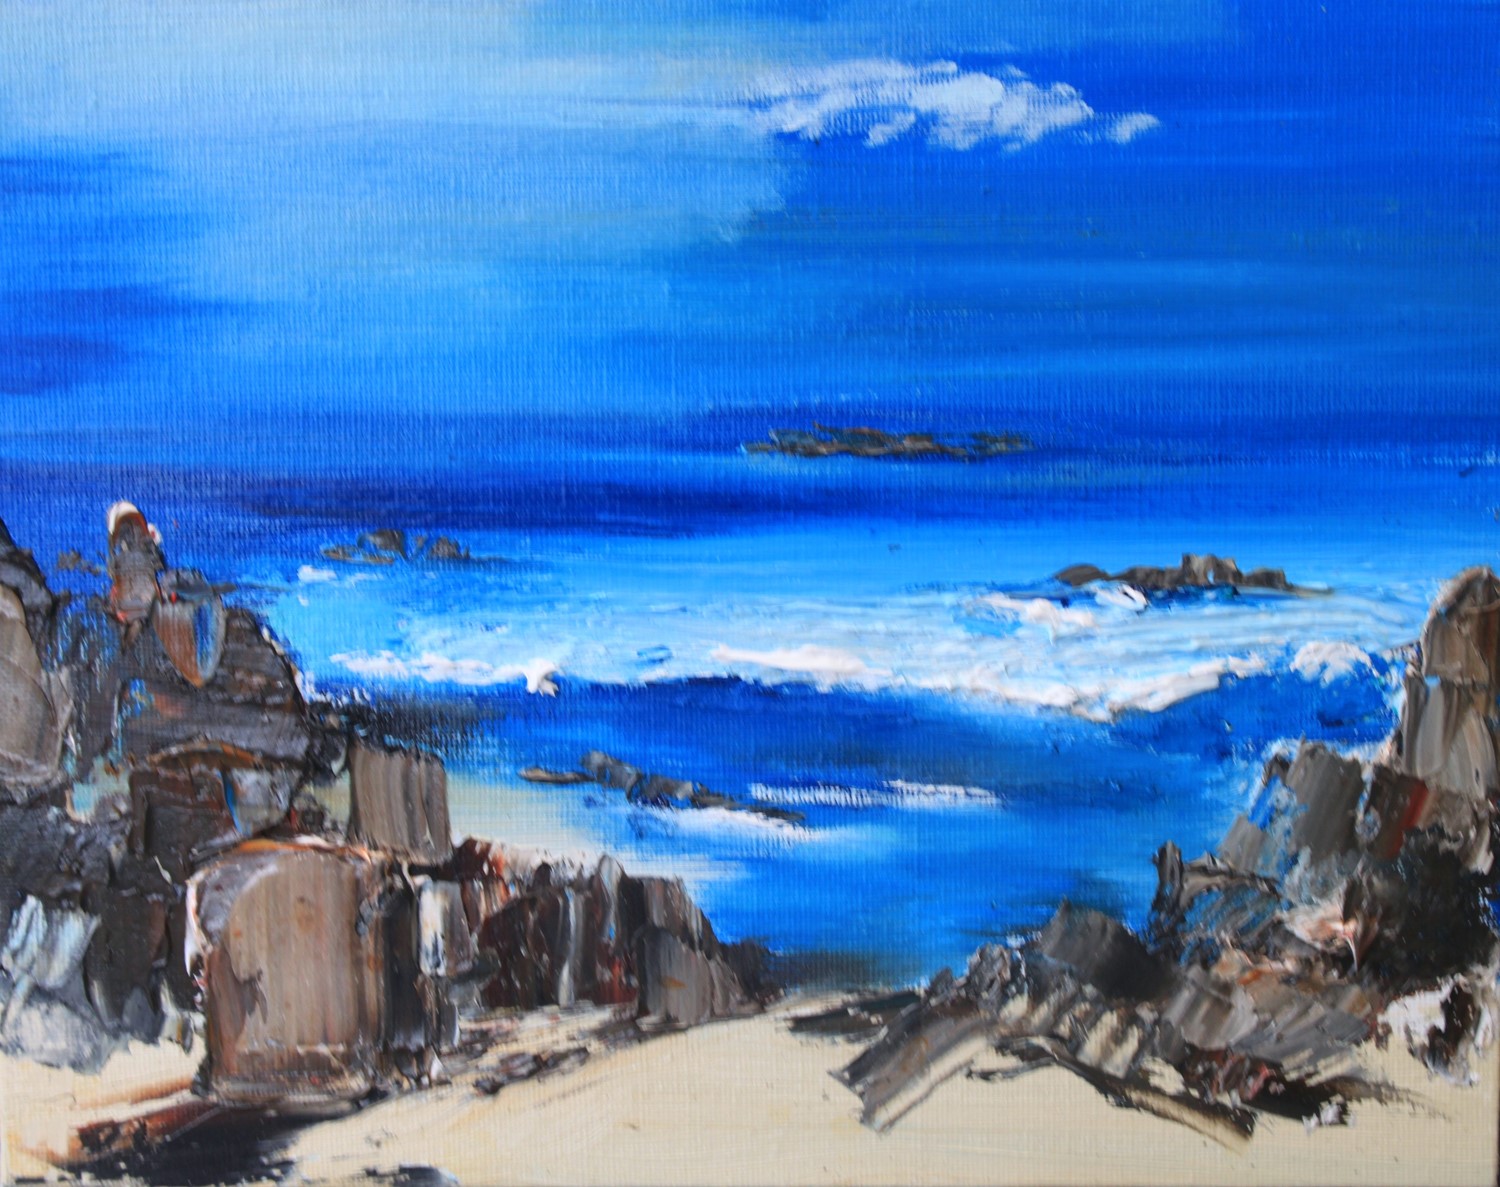 'Islet Bay' by artist Rosanne Barr